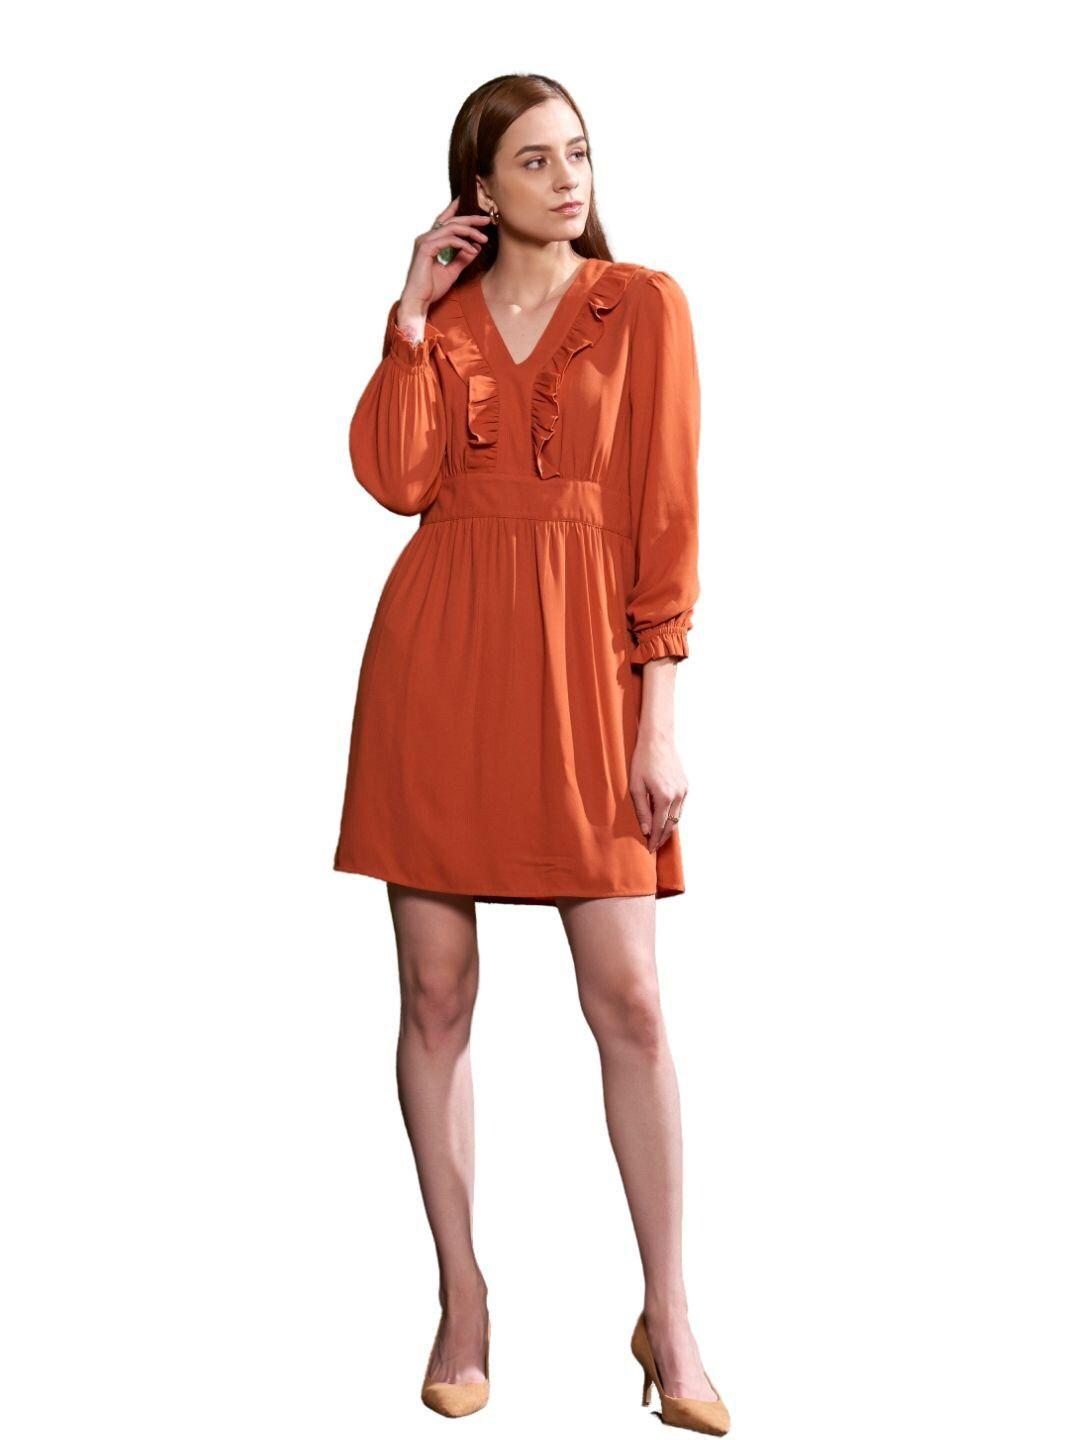 style-island-orange-a-line-dress